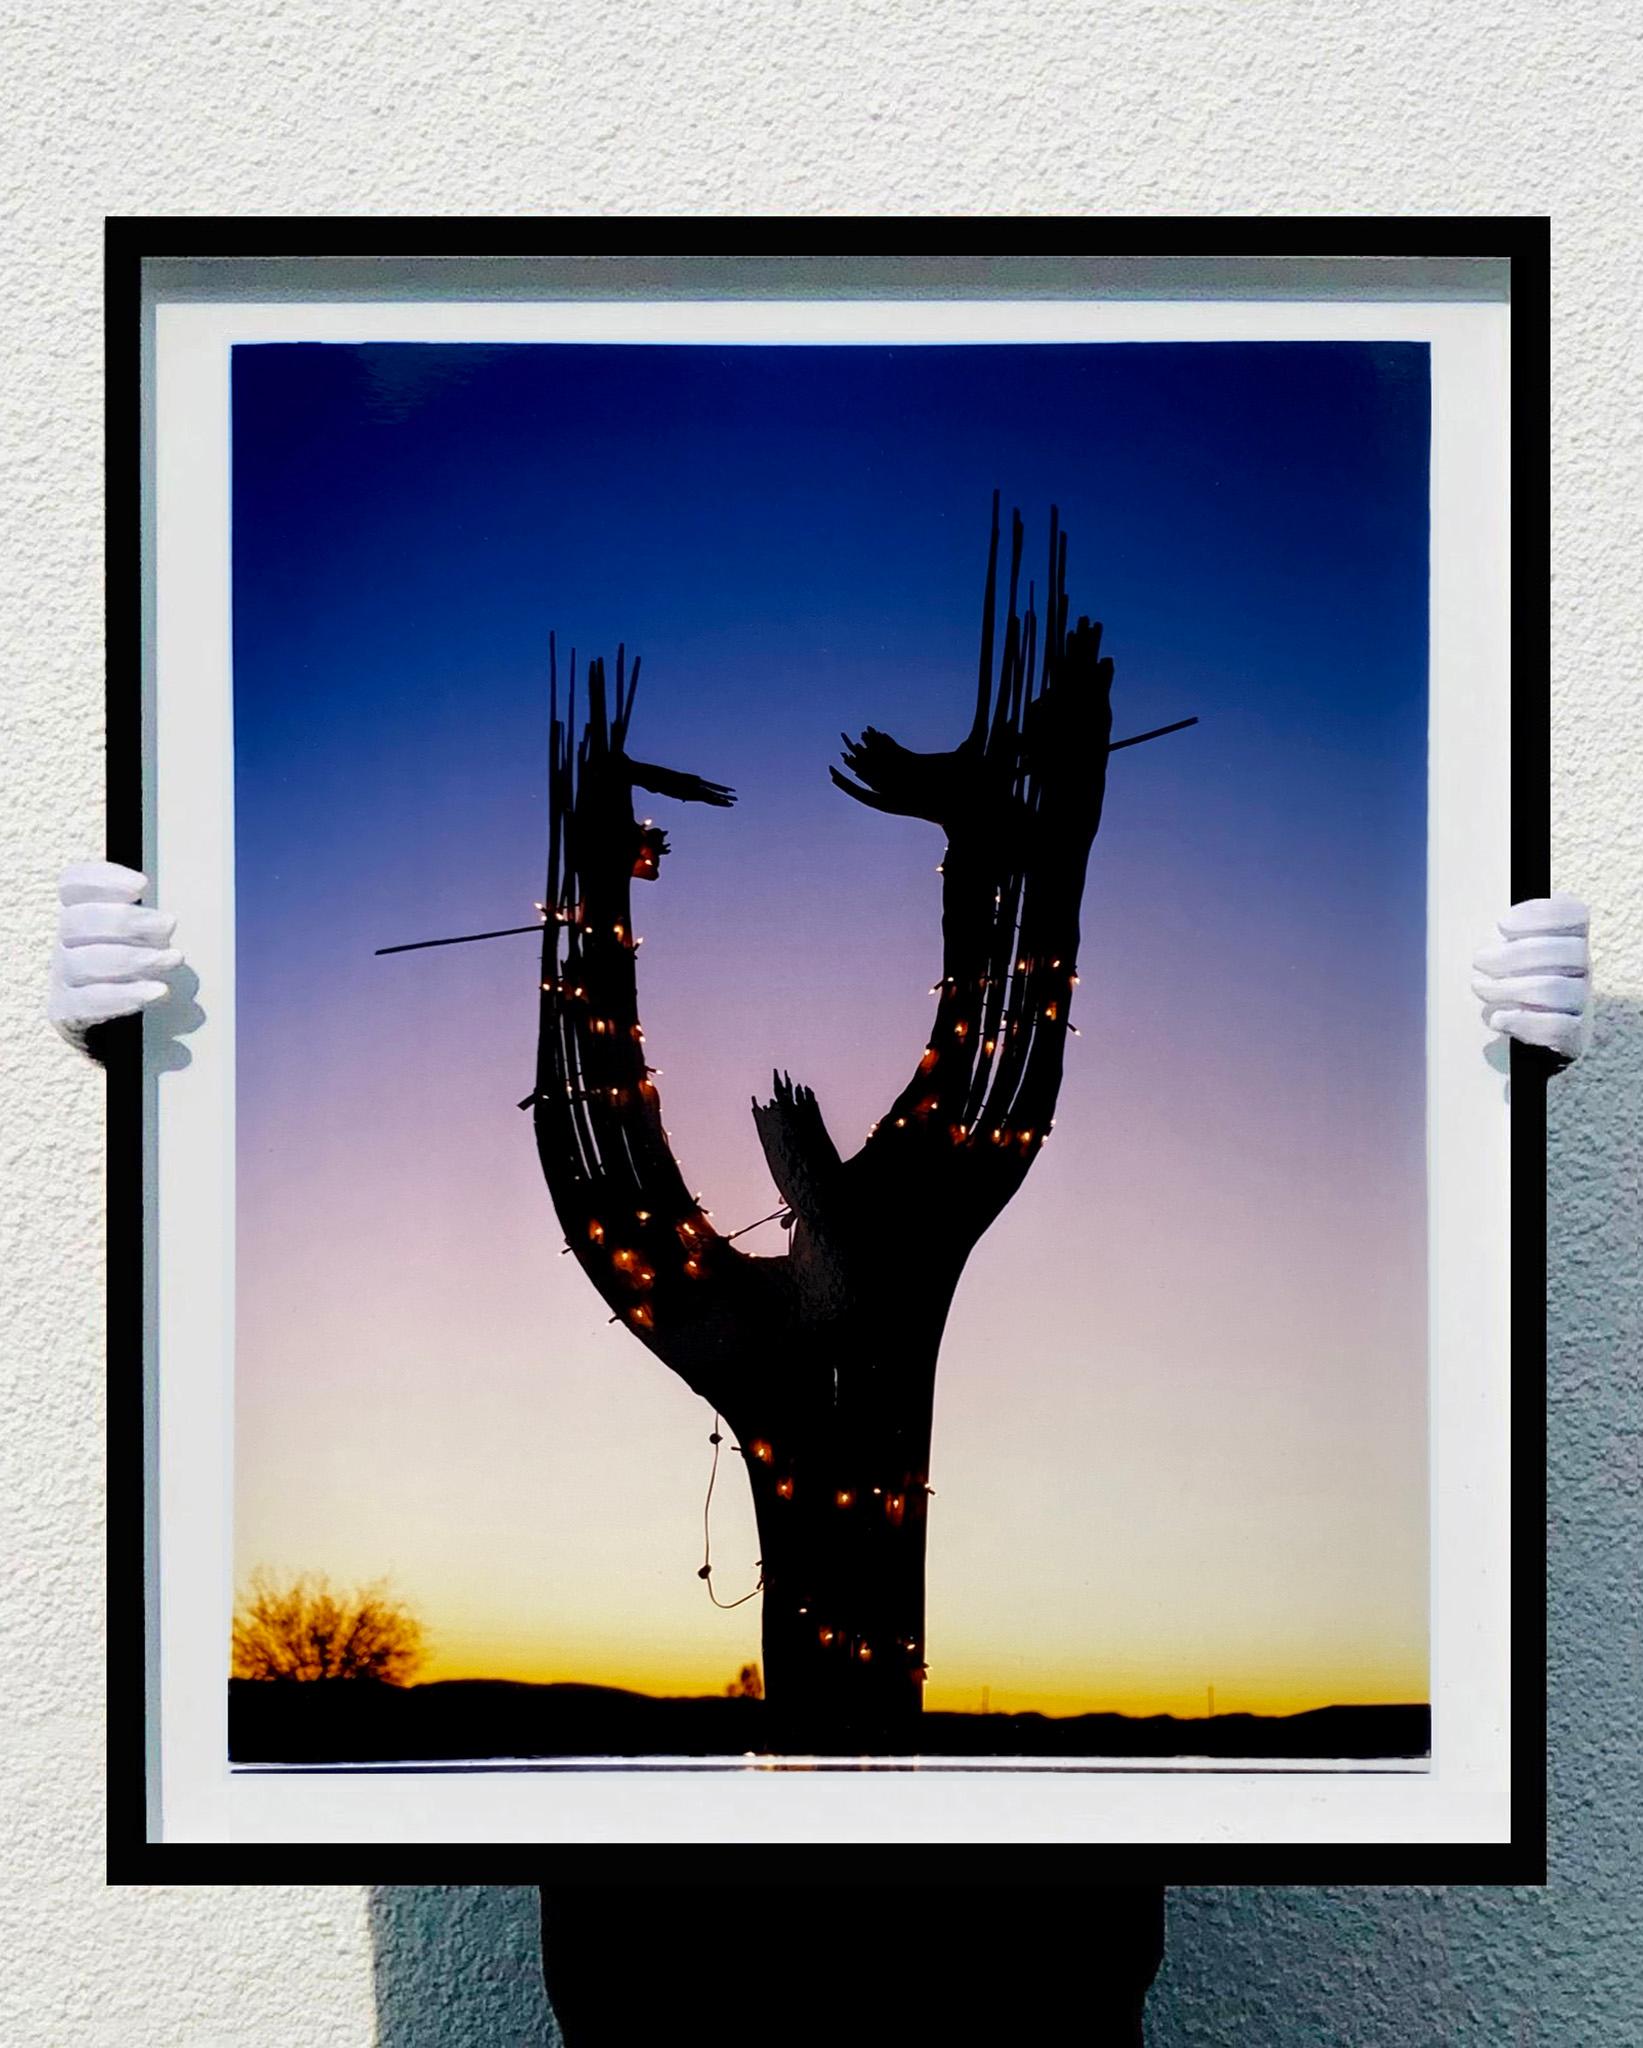 Cactus, Ajo, Arizona - American landscape color photography - Photograph by Richard Heeps